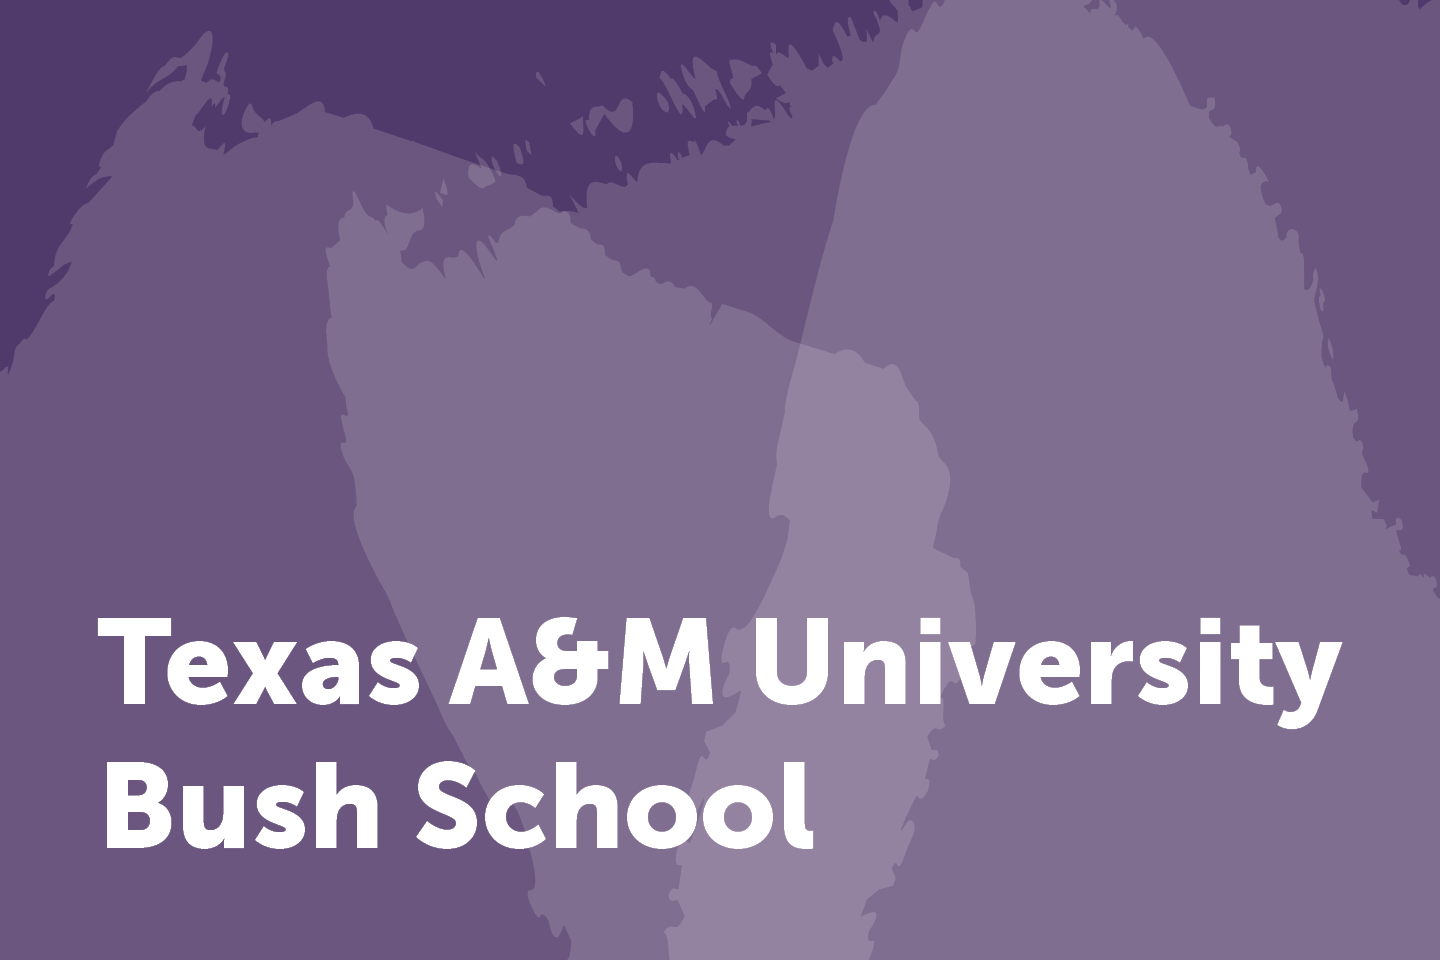 Texas A&M University, Bush School